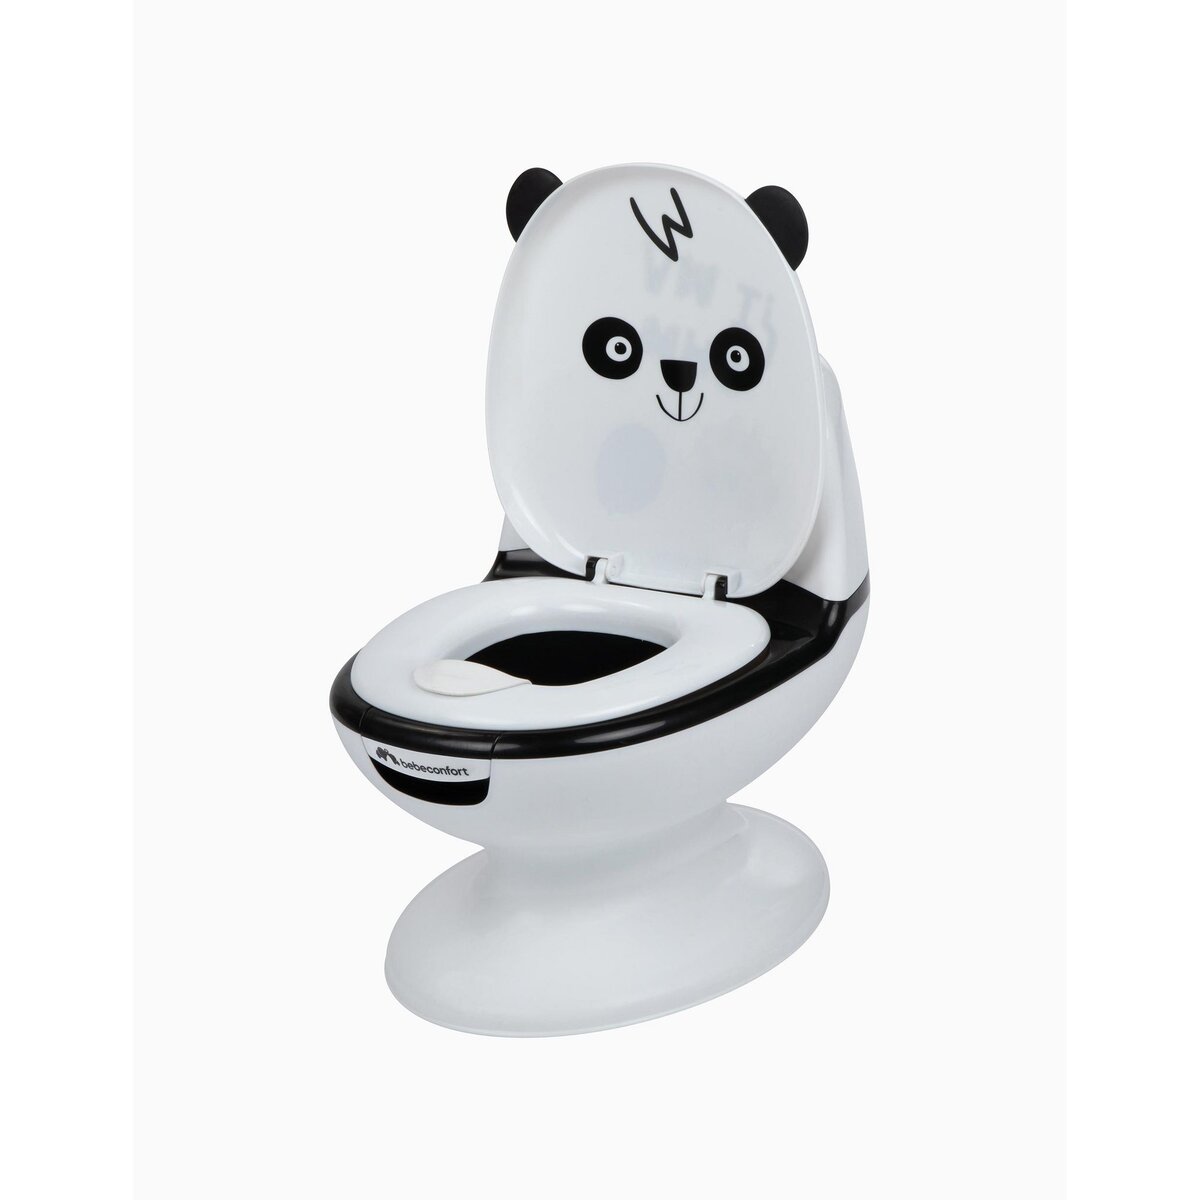 Promo Mini-Toilette Panda chez Auchan